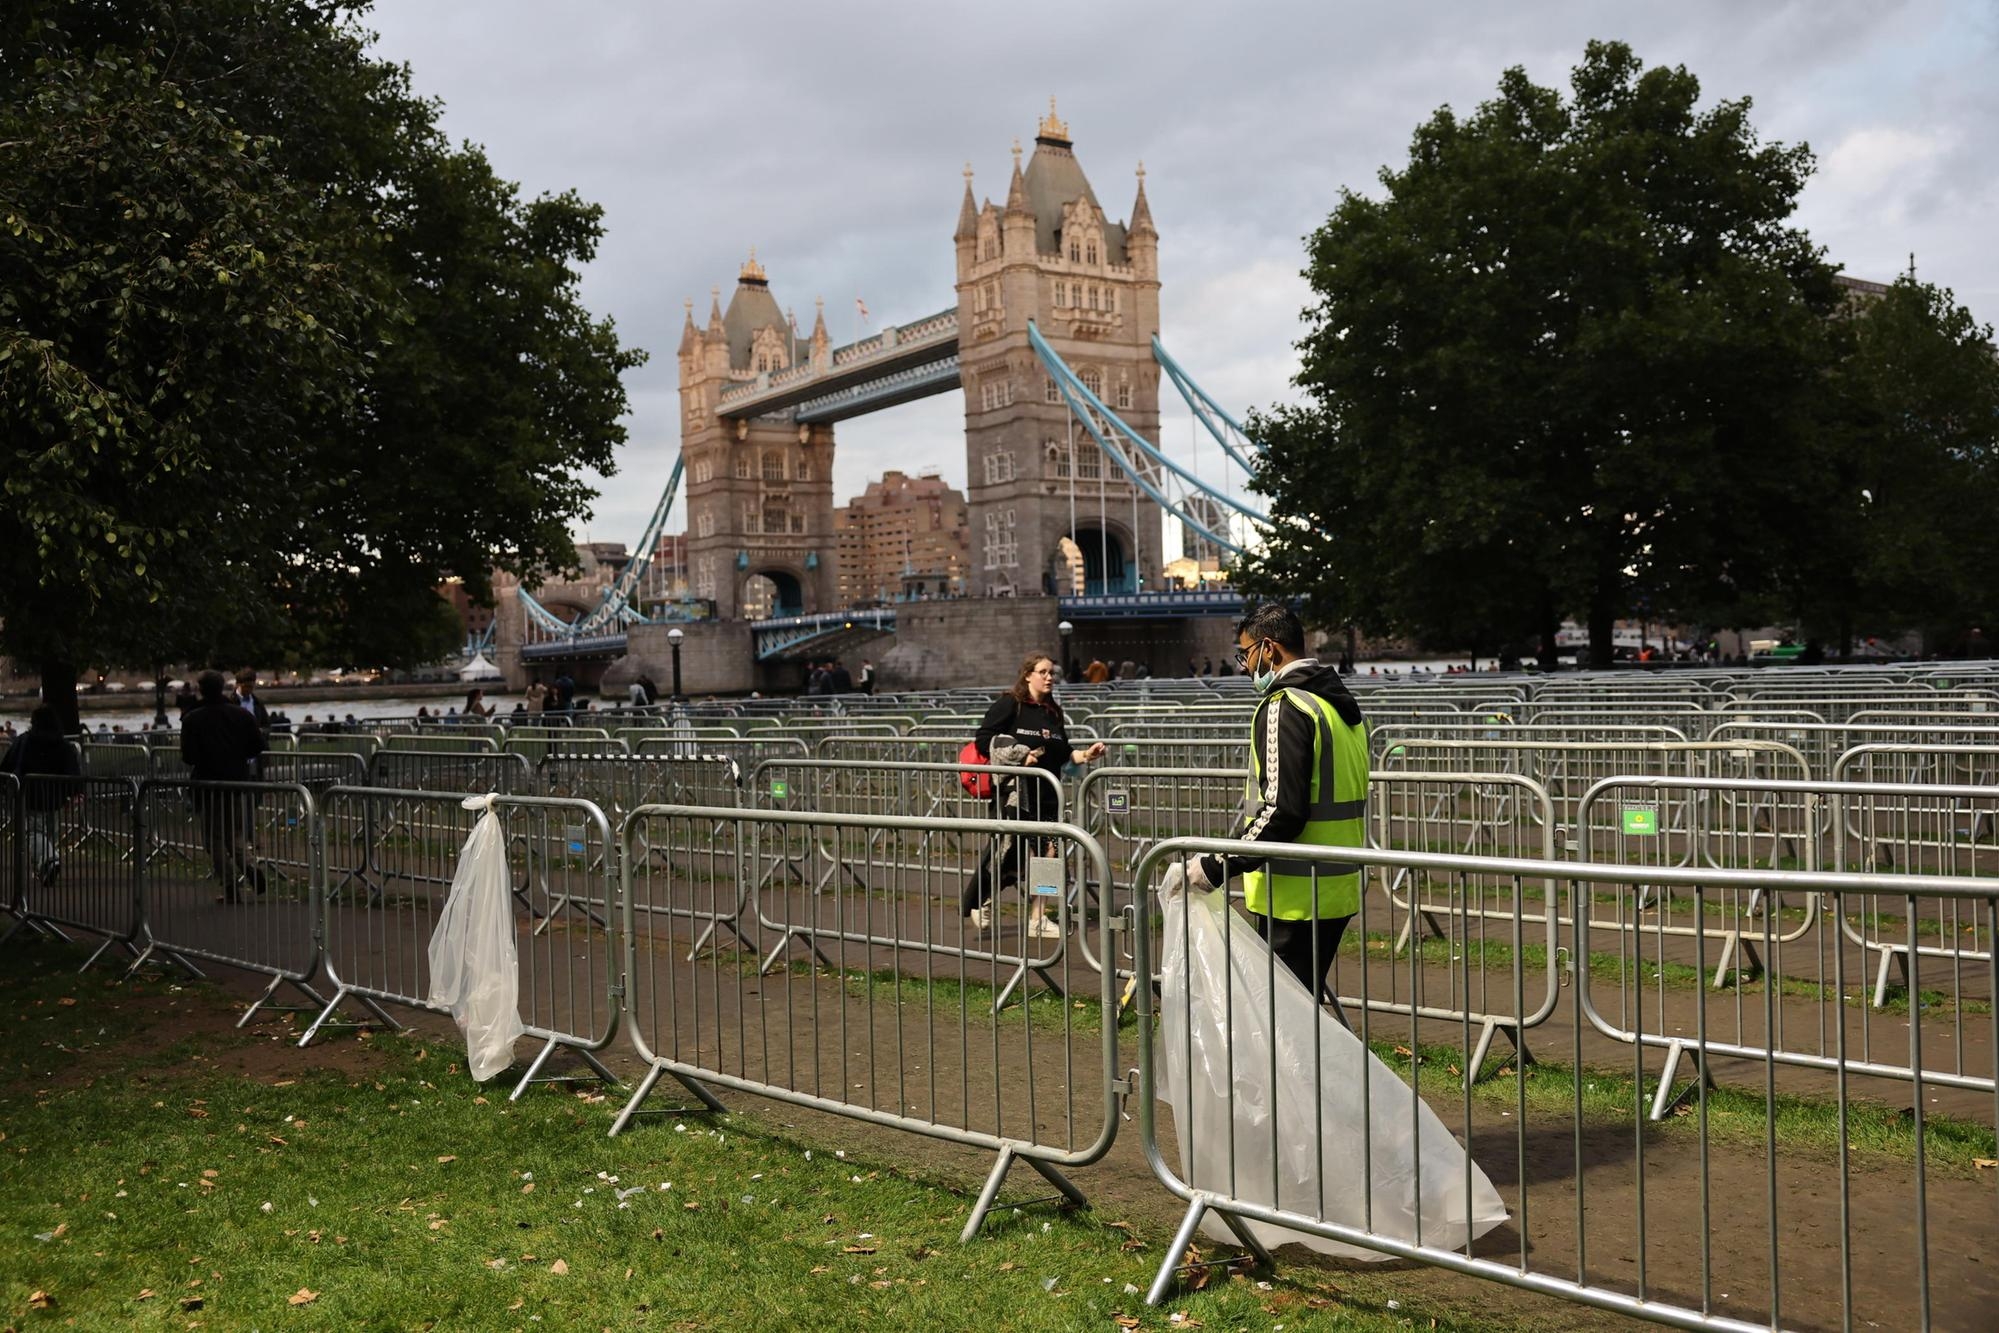 Londra si prepara a dire addio alla Regina Elisabetta